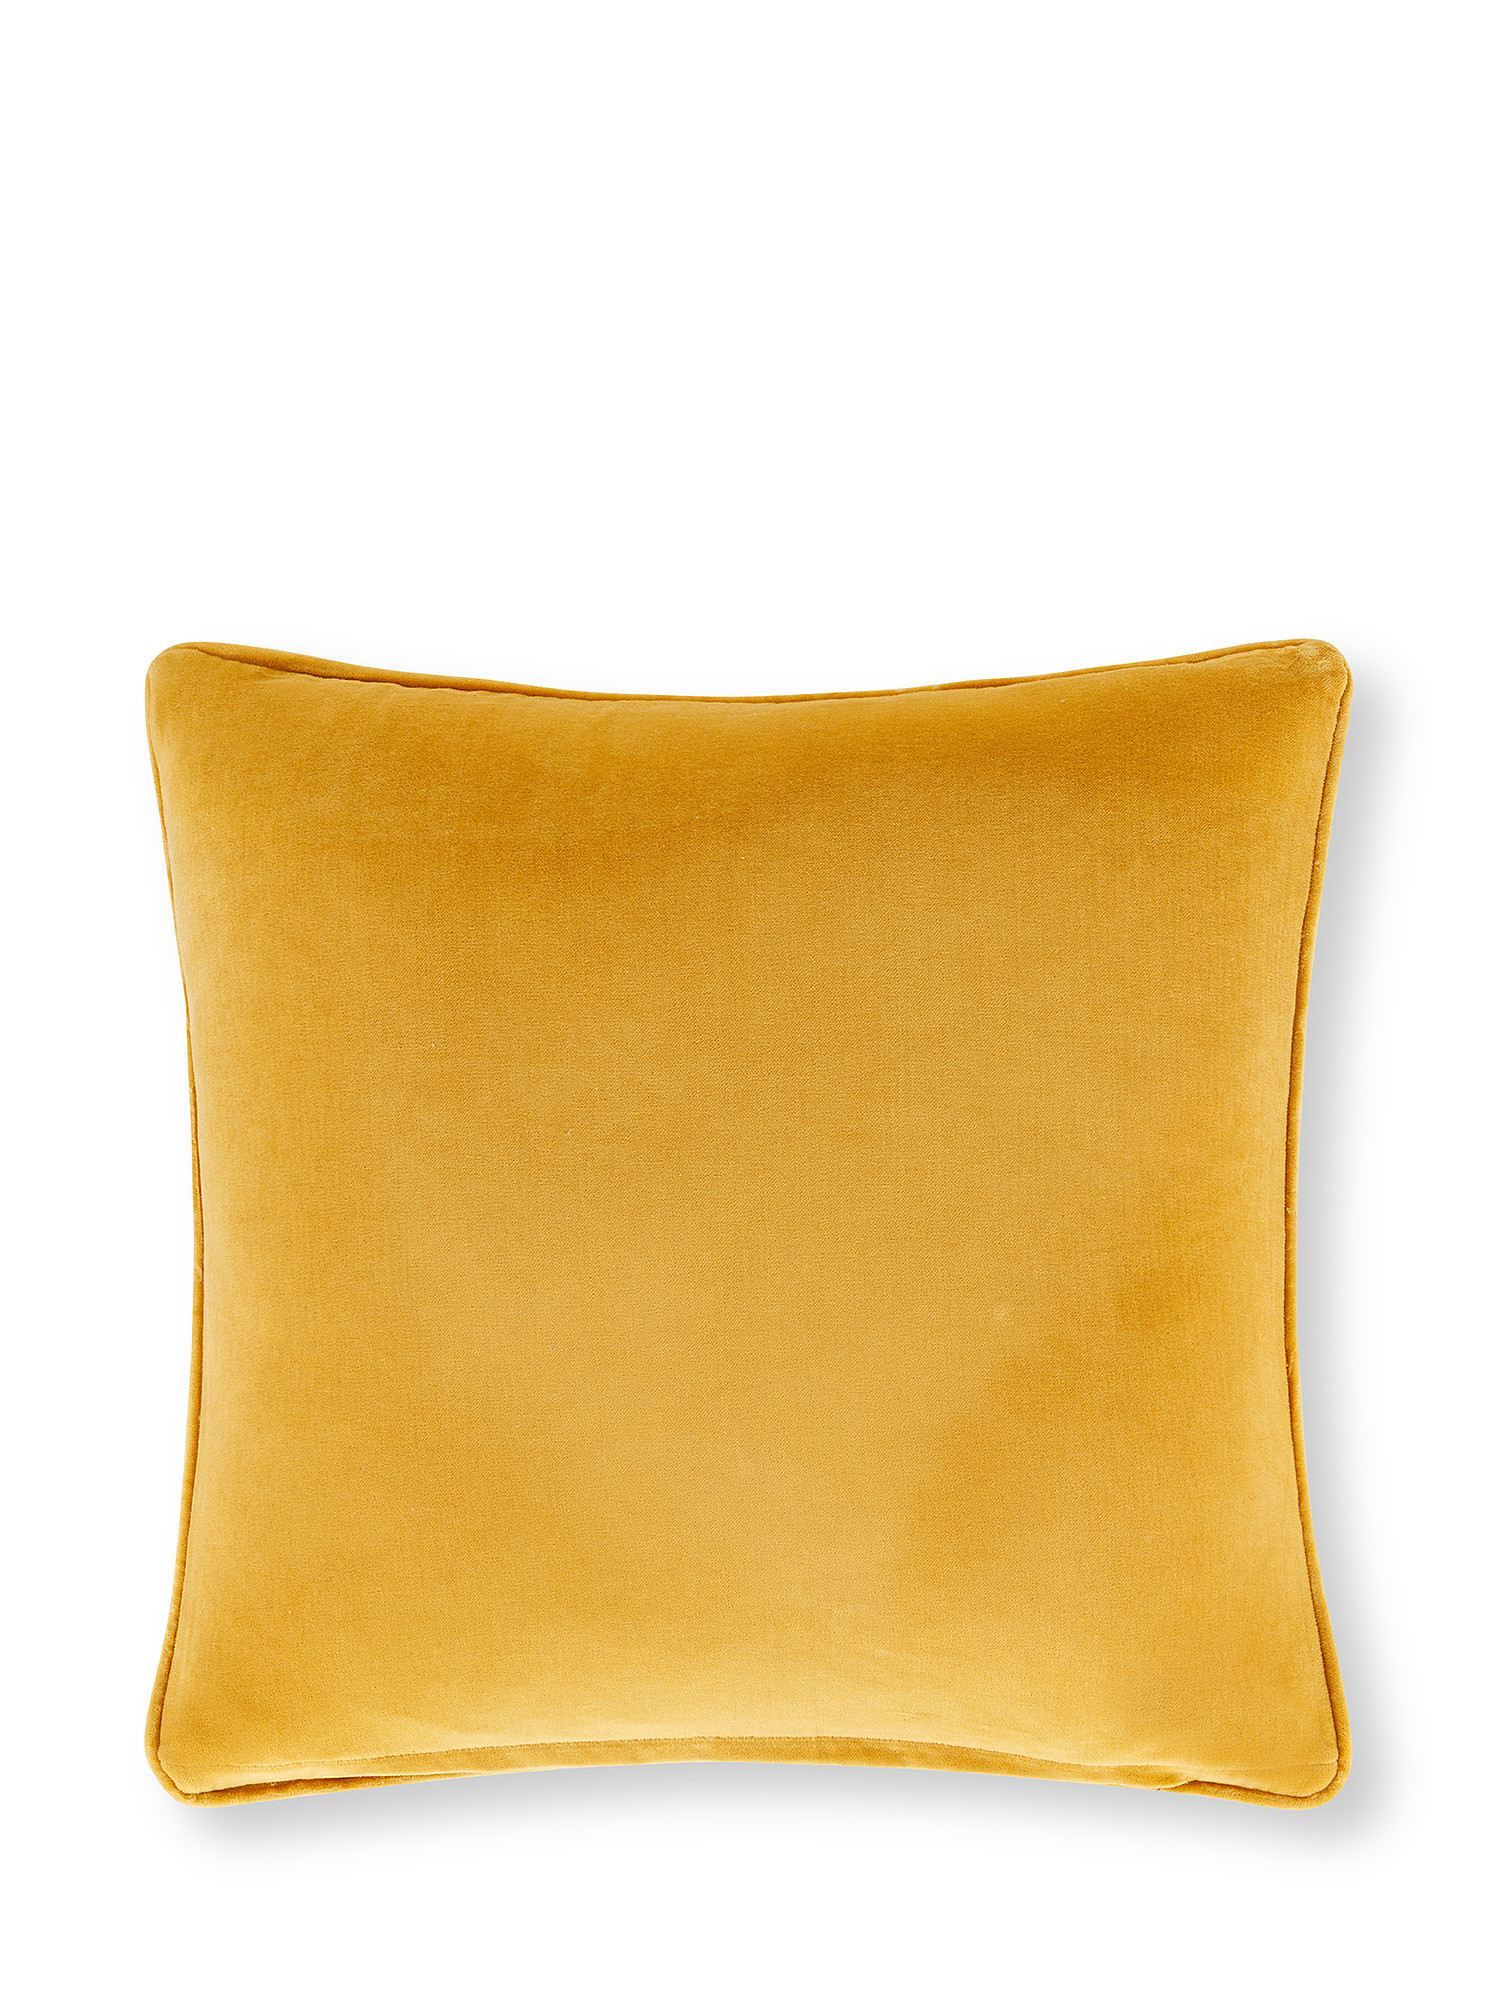 Plain velvet cushion 45x45cm, Yellow, large image number 1